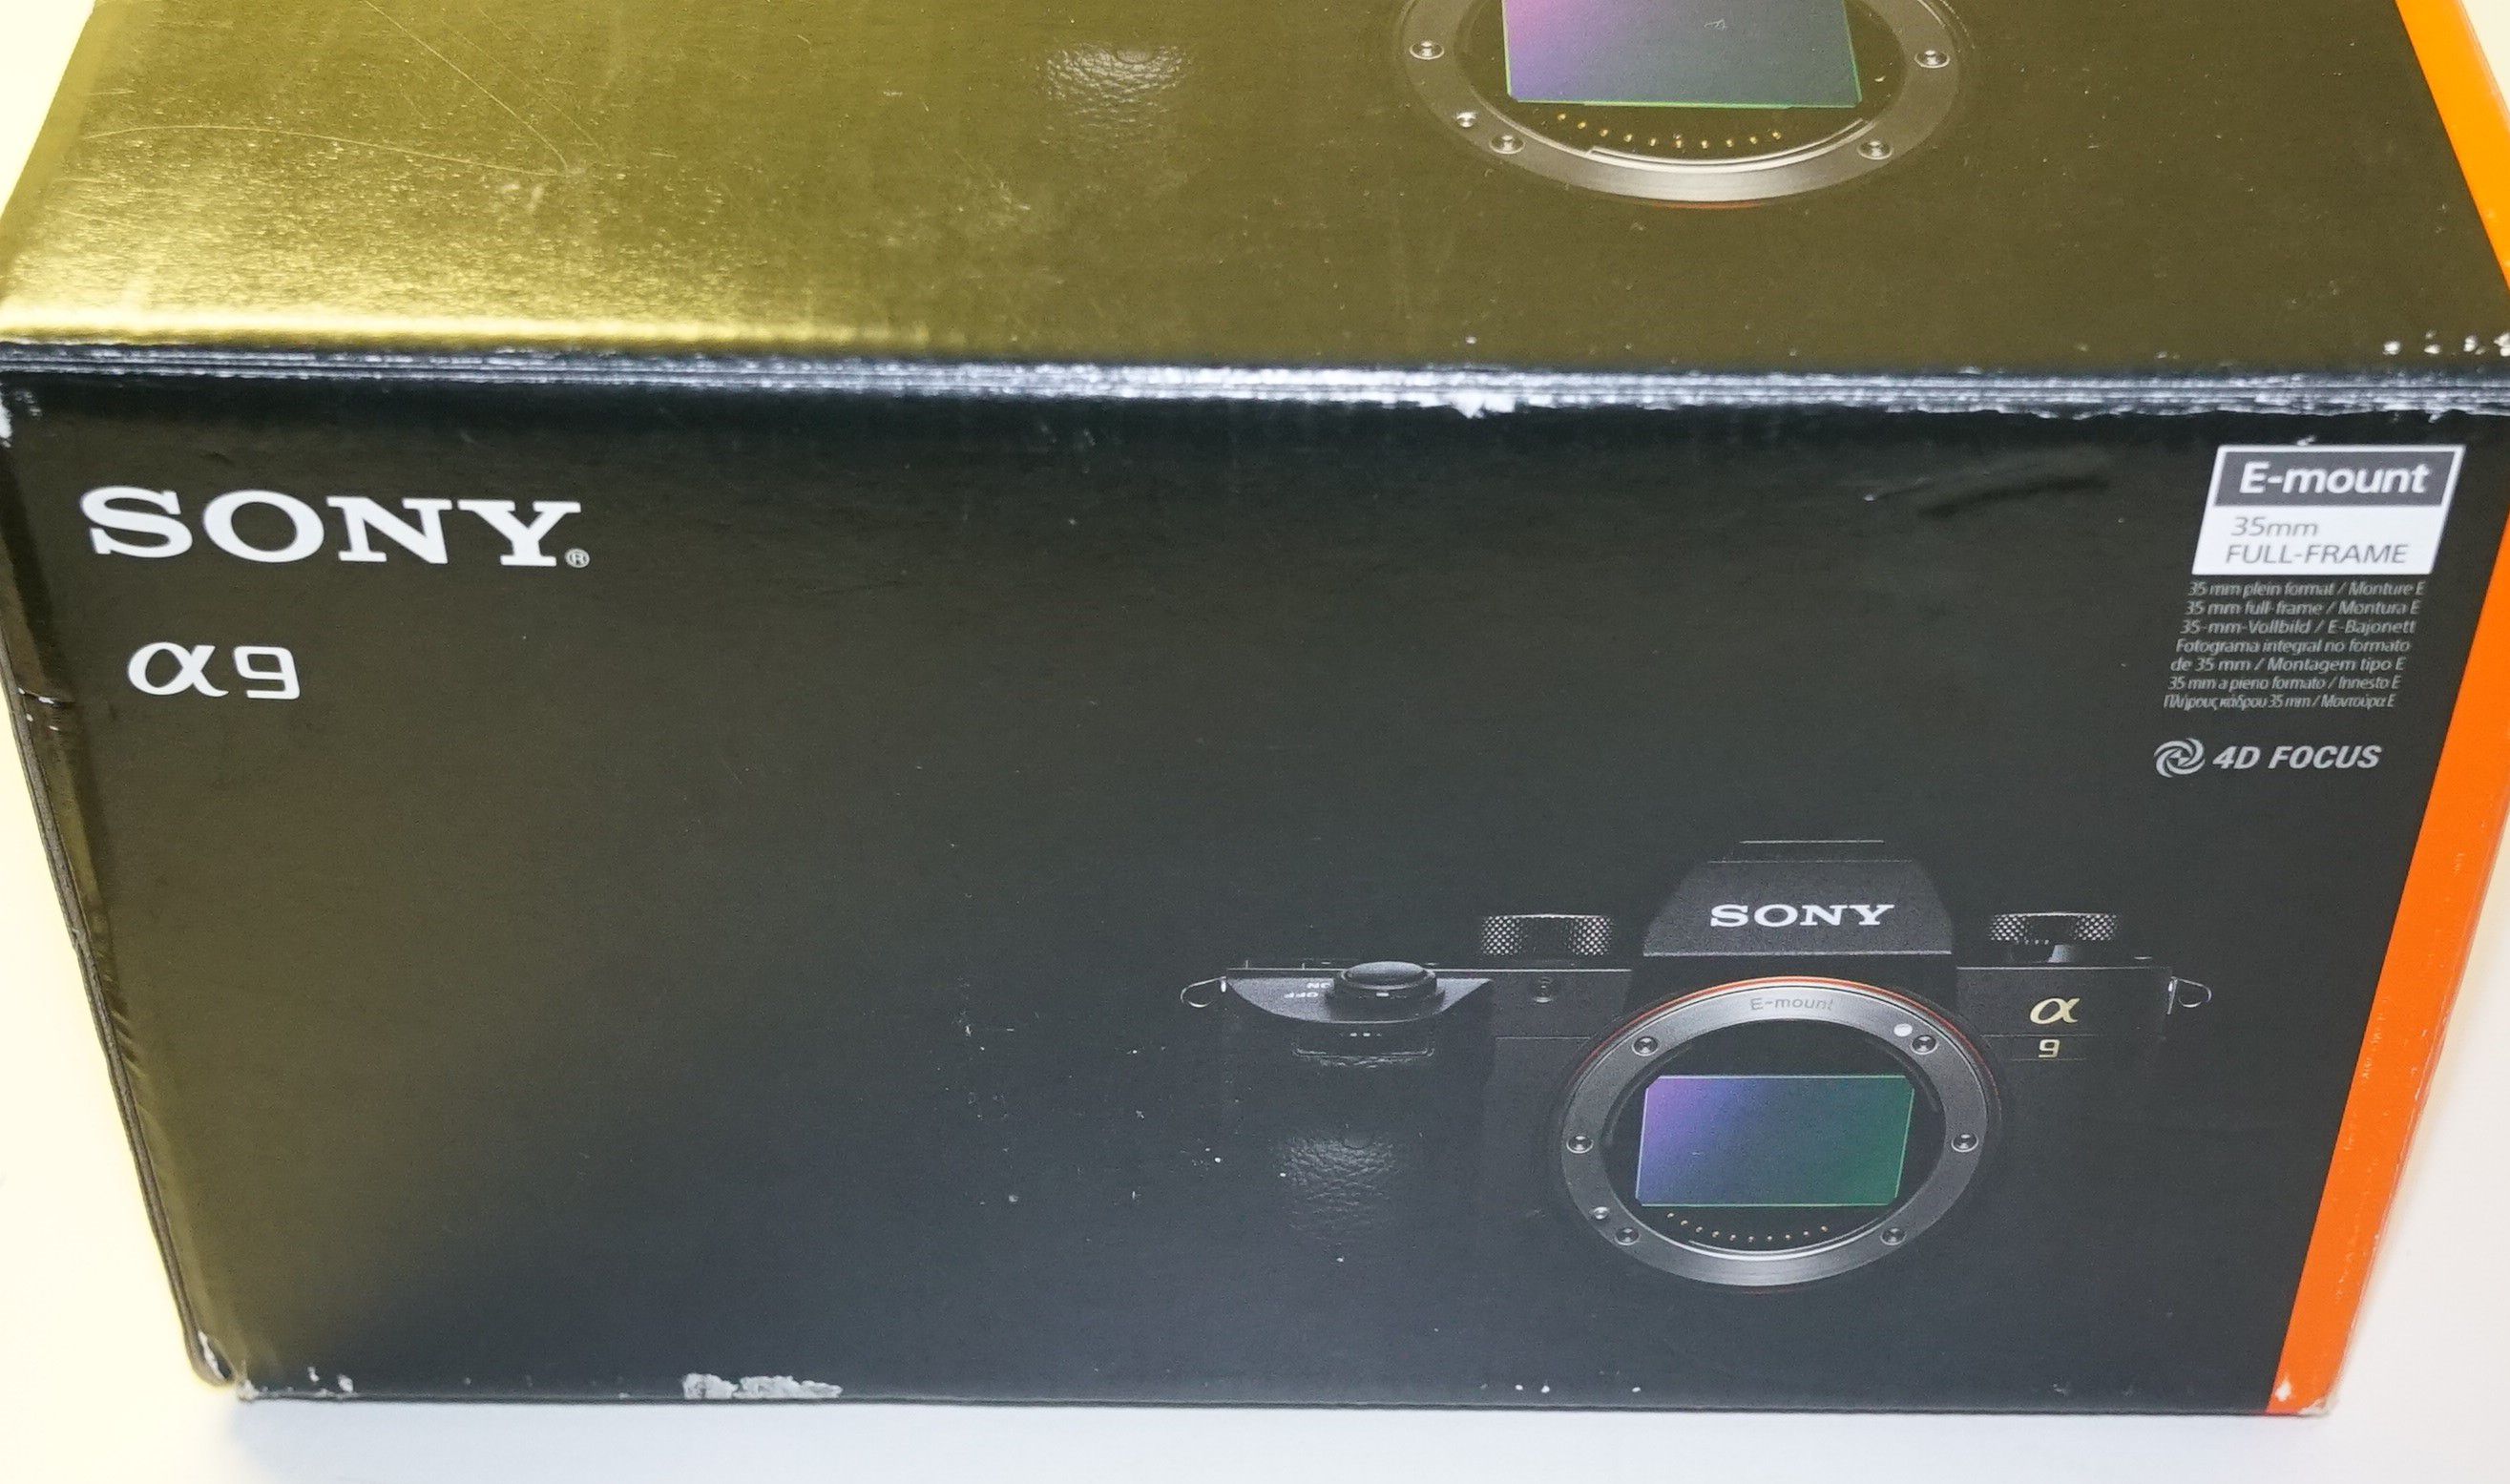 Sony a9 Full Frame Mirrorless Camera - In Box